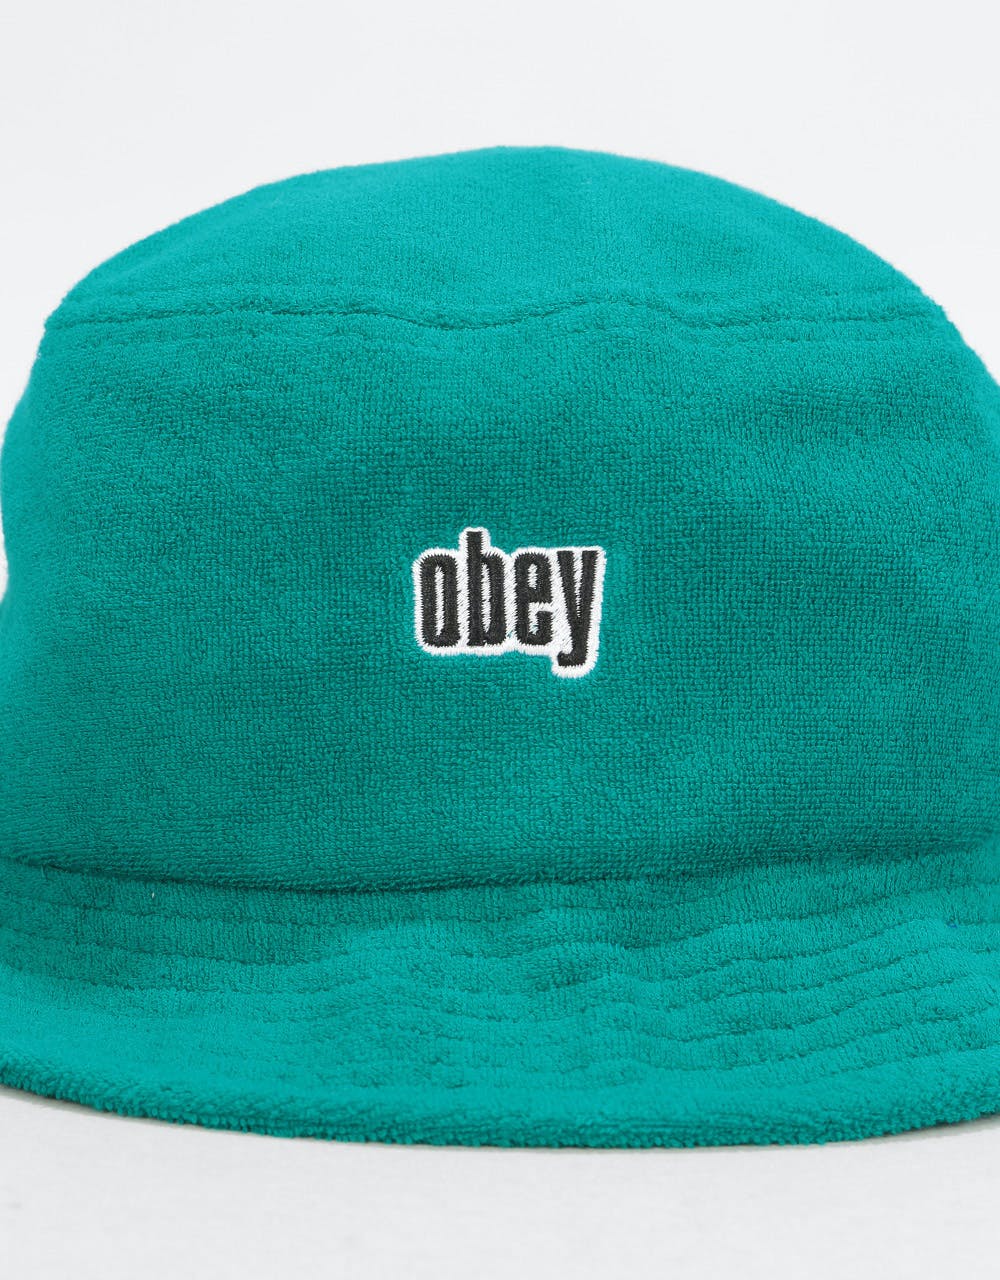 Obey Unwind Bucket Hat - Teal